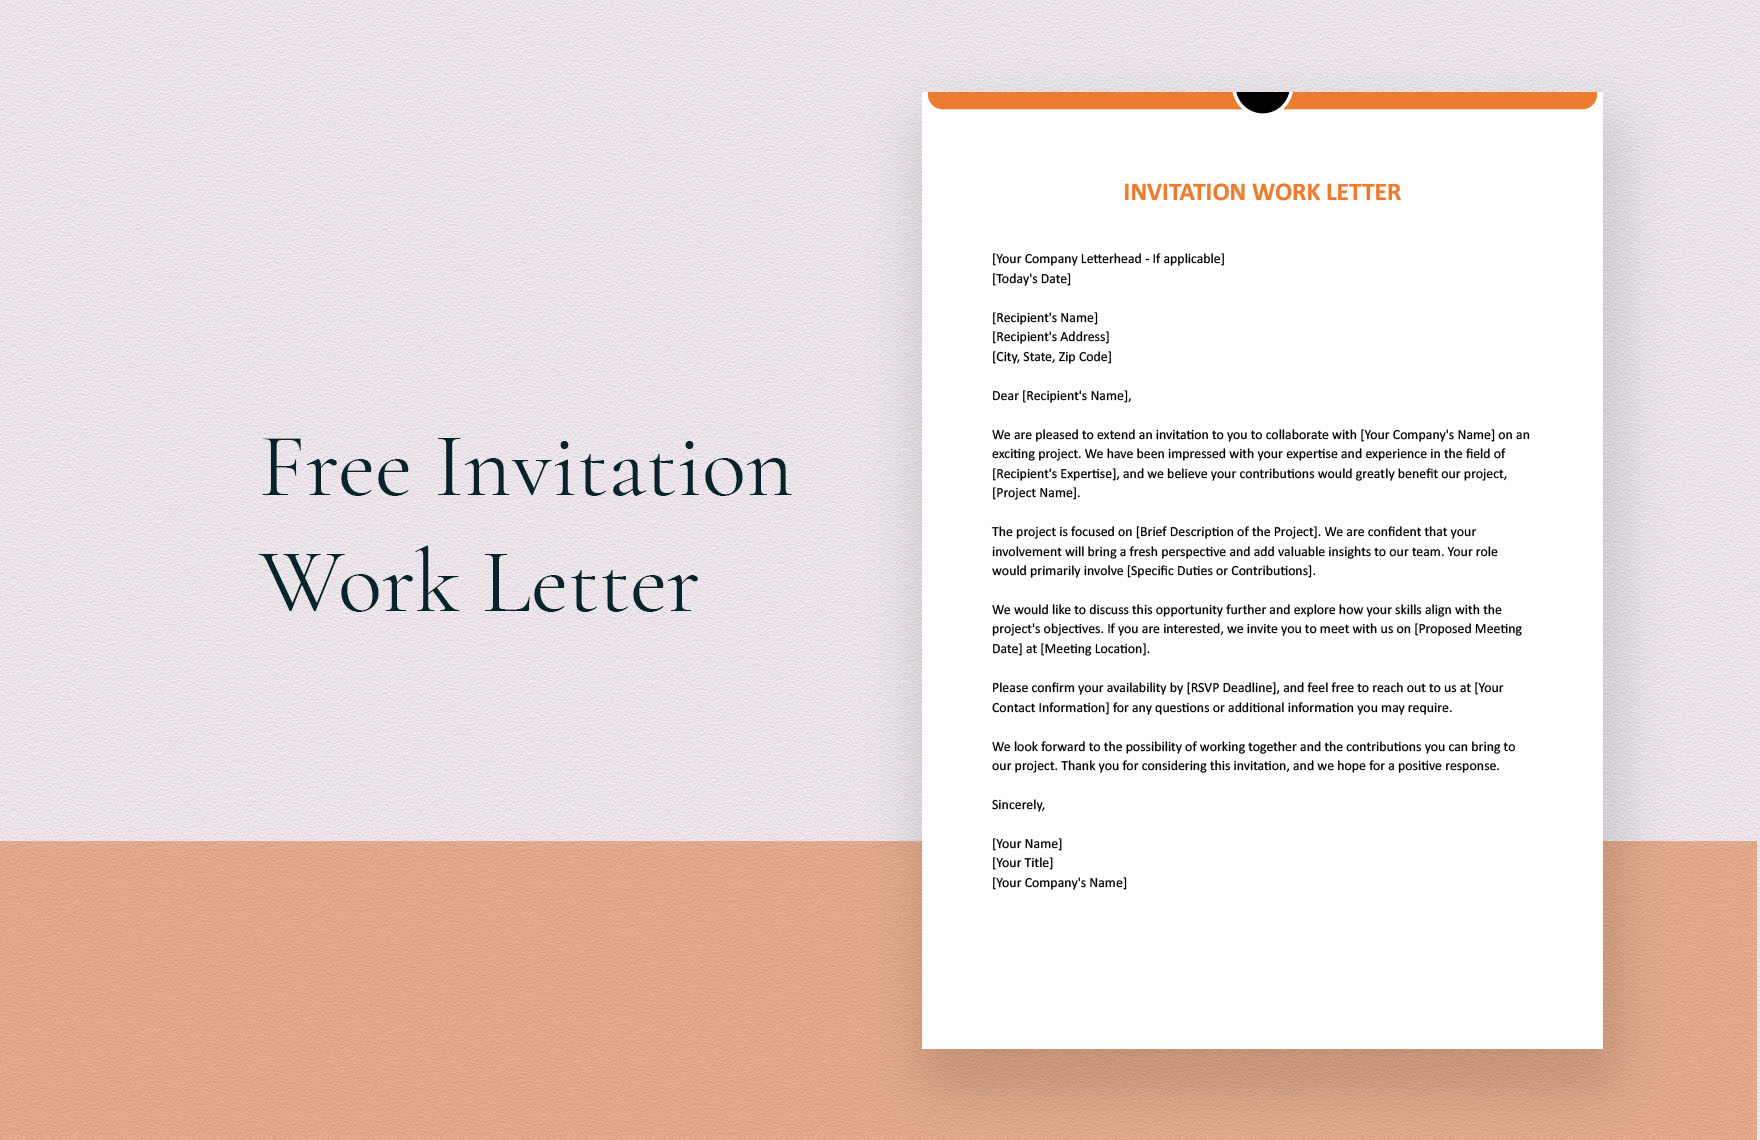 Invitation Work Letter